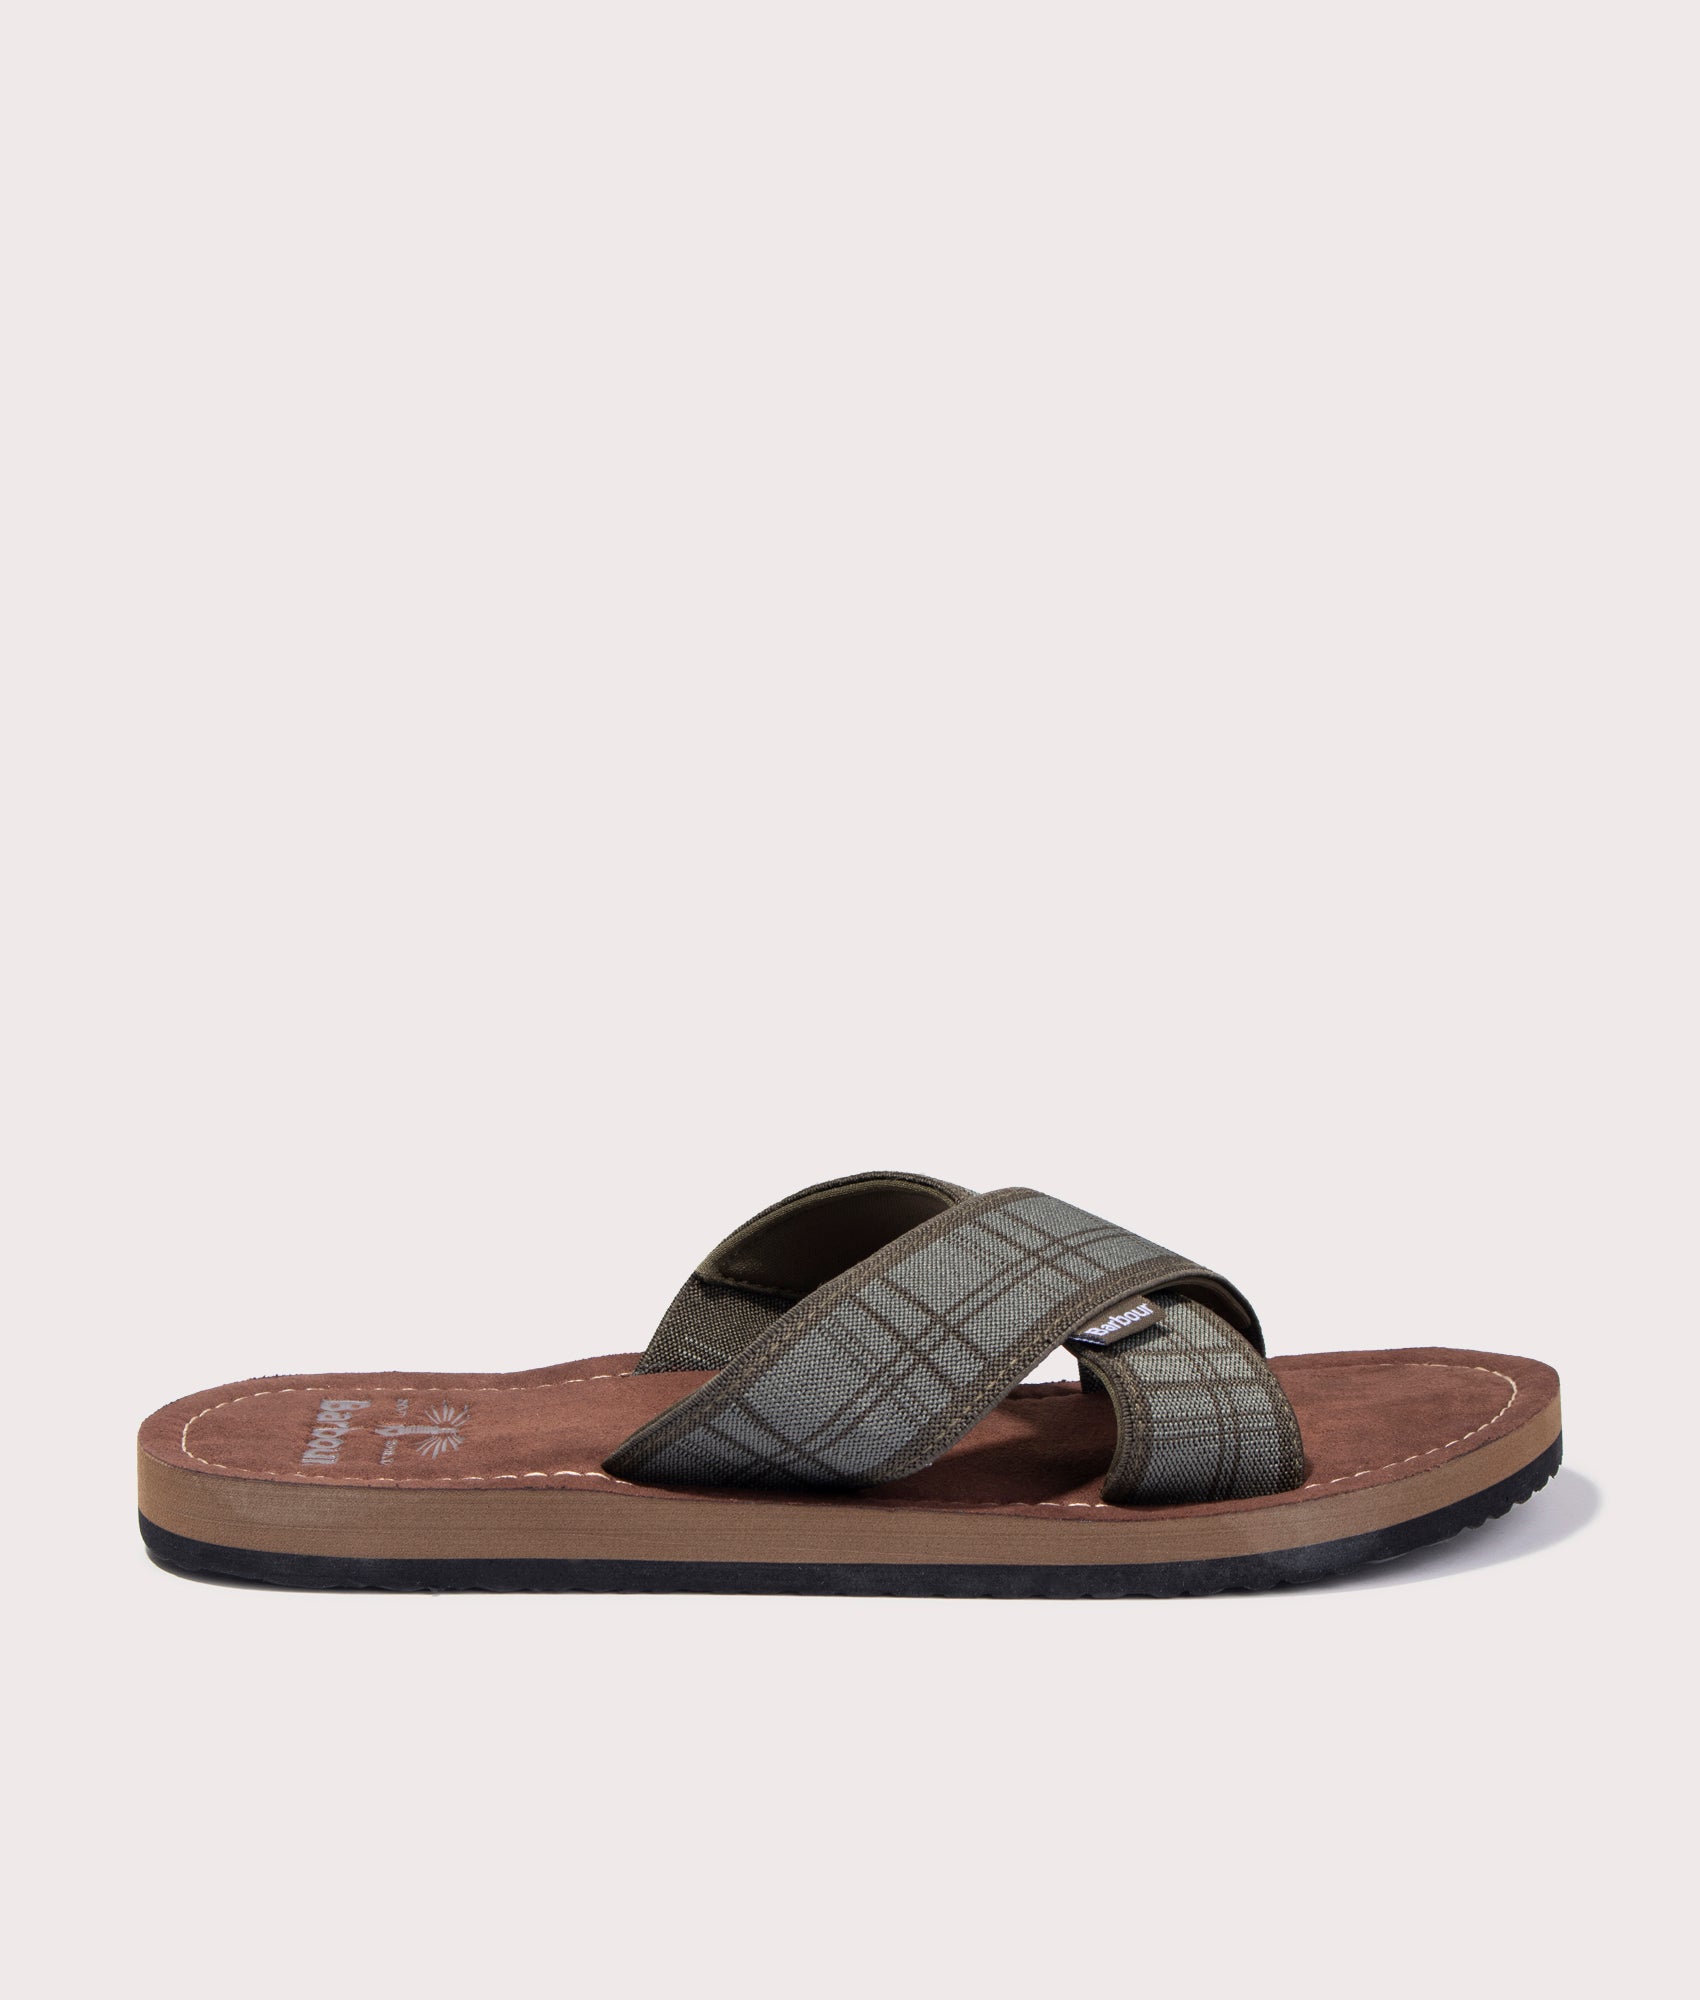 Barbour Lifestyle Mens Tartan Toeman Beach Sandals - Colour: TN16 Olive Tartan - Size: 10